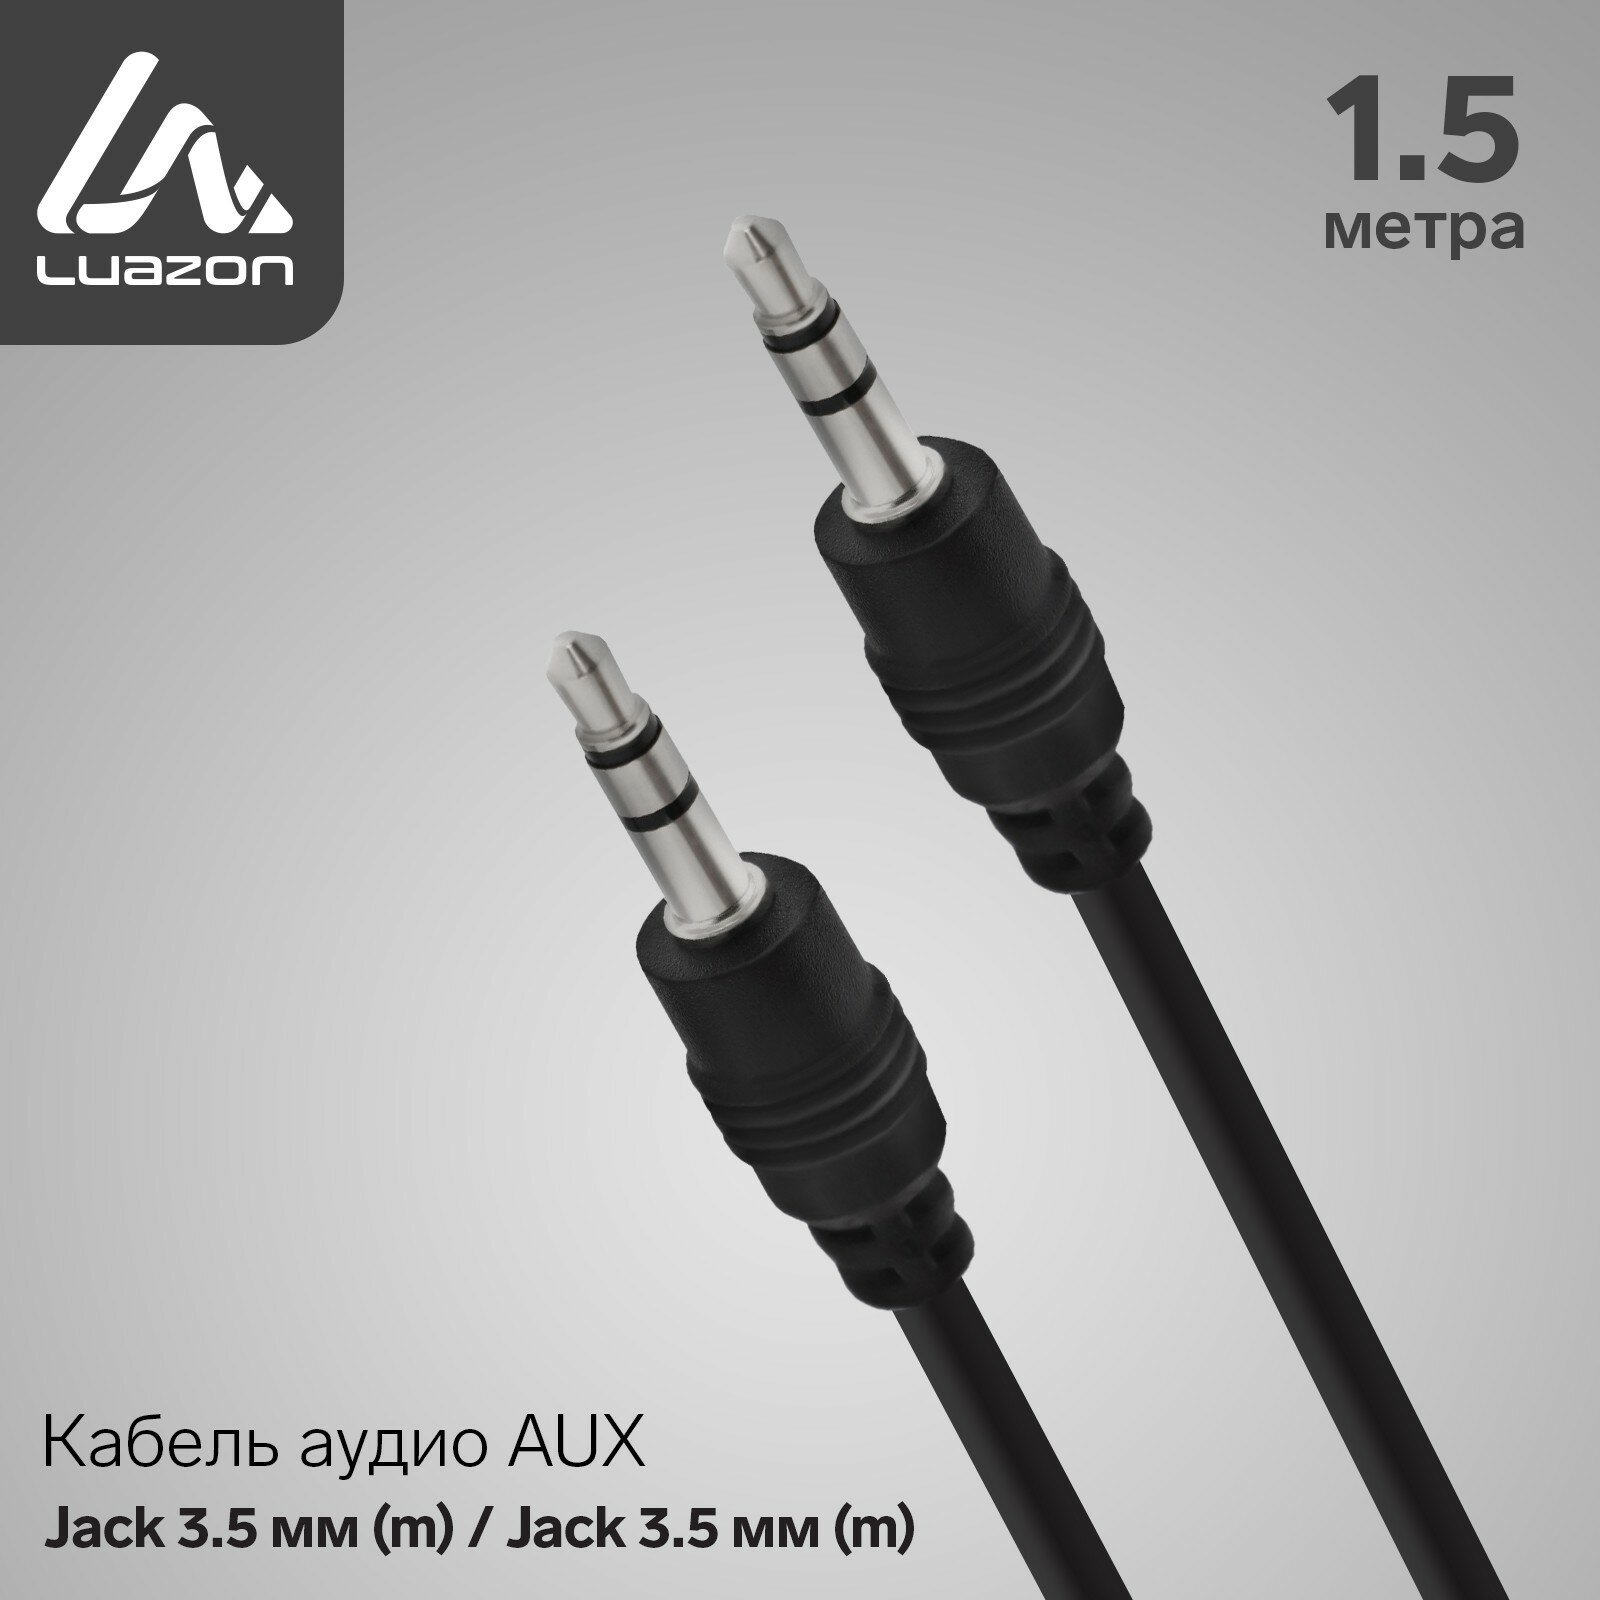 Кабель аудио AUX LuazON, Jack 3.5 мм (m)-Jack 3.5 мм (m), 1.5 м, чёрный (1шт.)